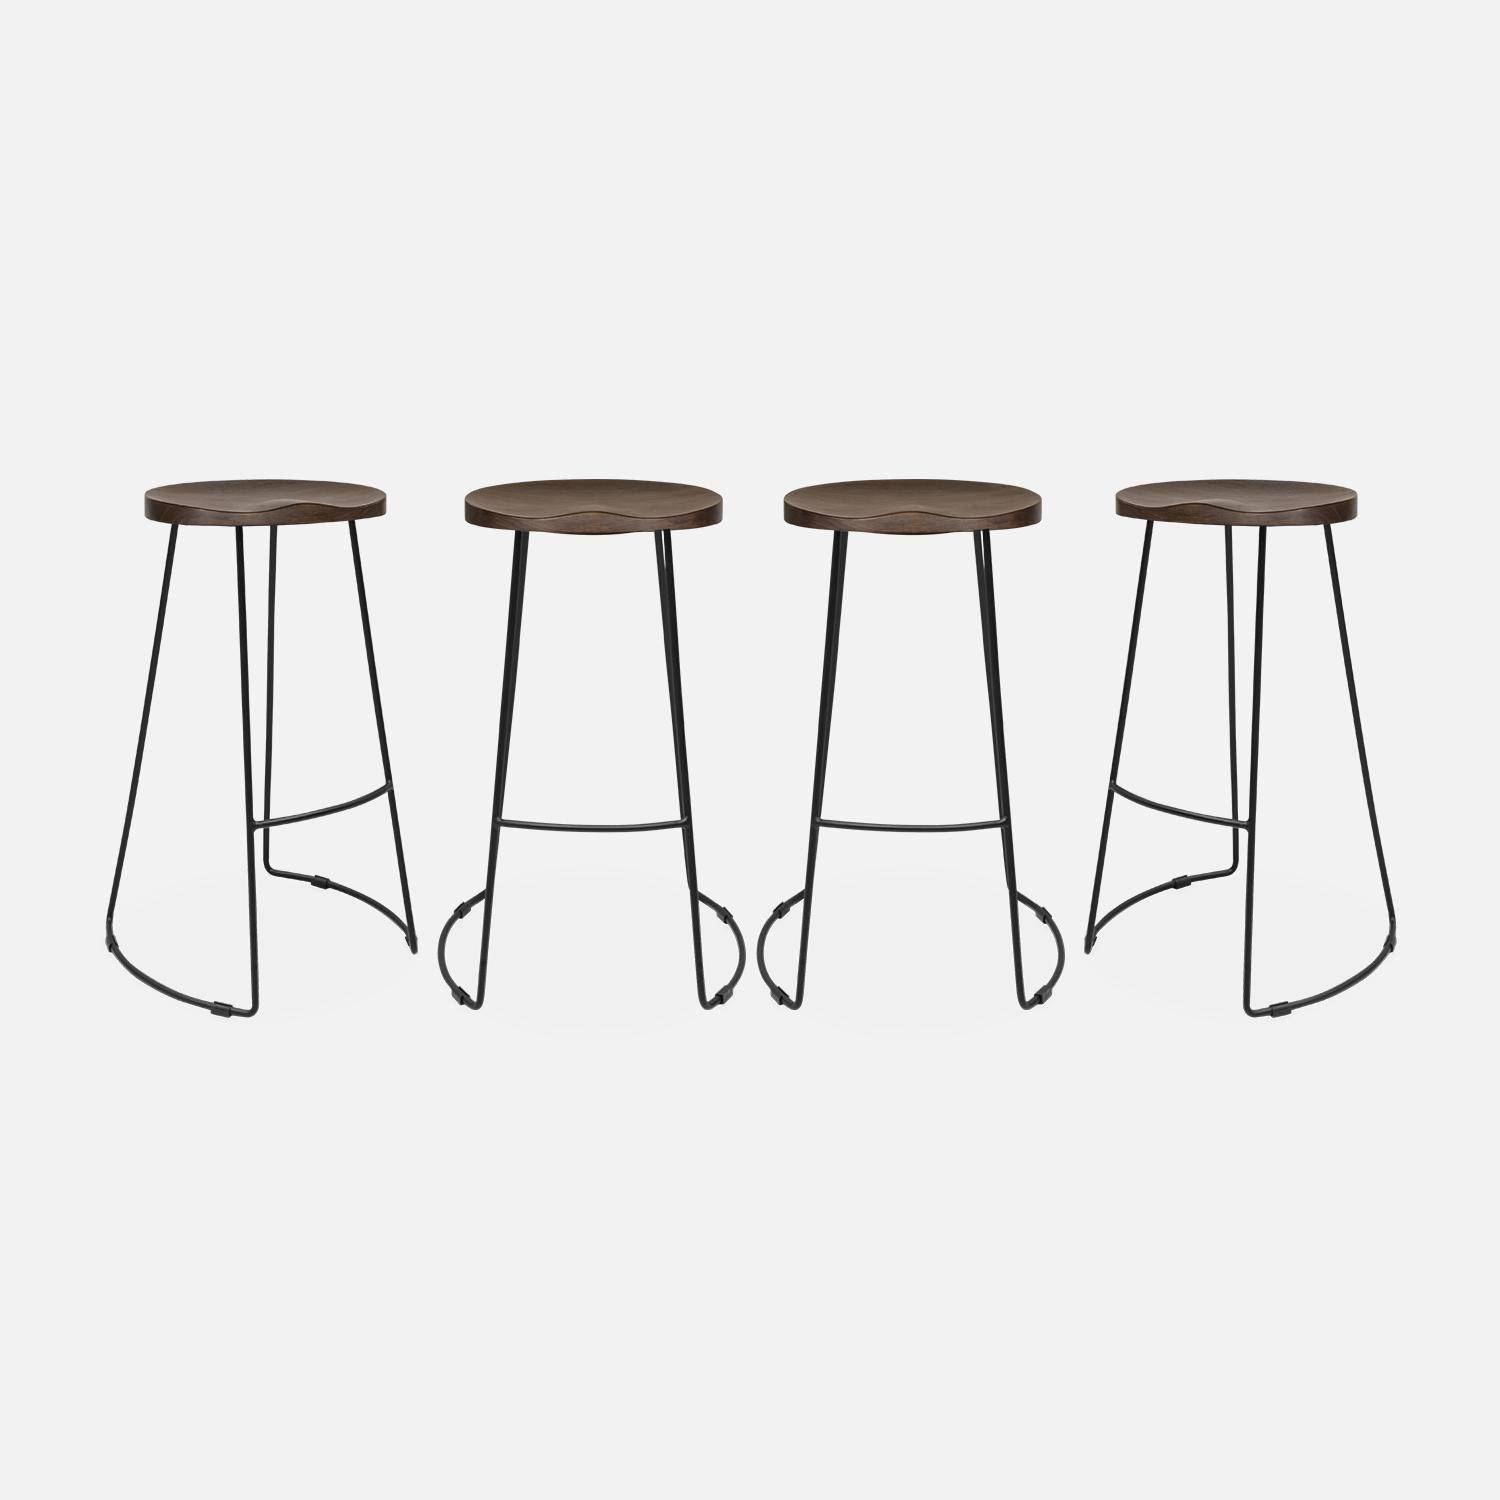 Set of 4 industrial metal and wooden bar stools, 47x40x75cm, Jaya, Light Walnut, Mango wood seat, black metal legs Photo3